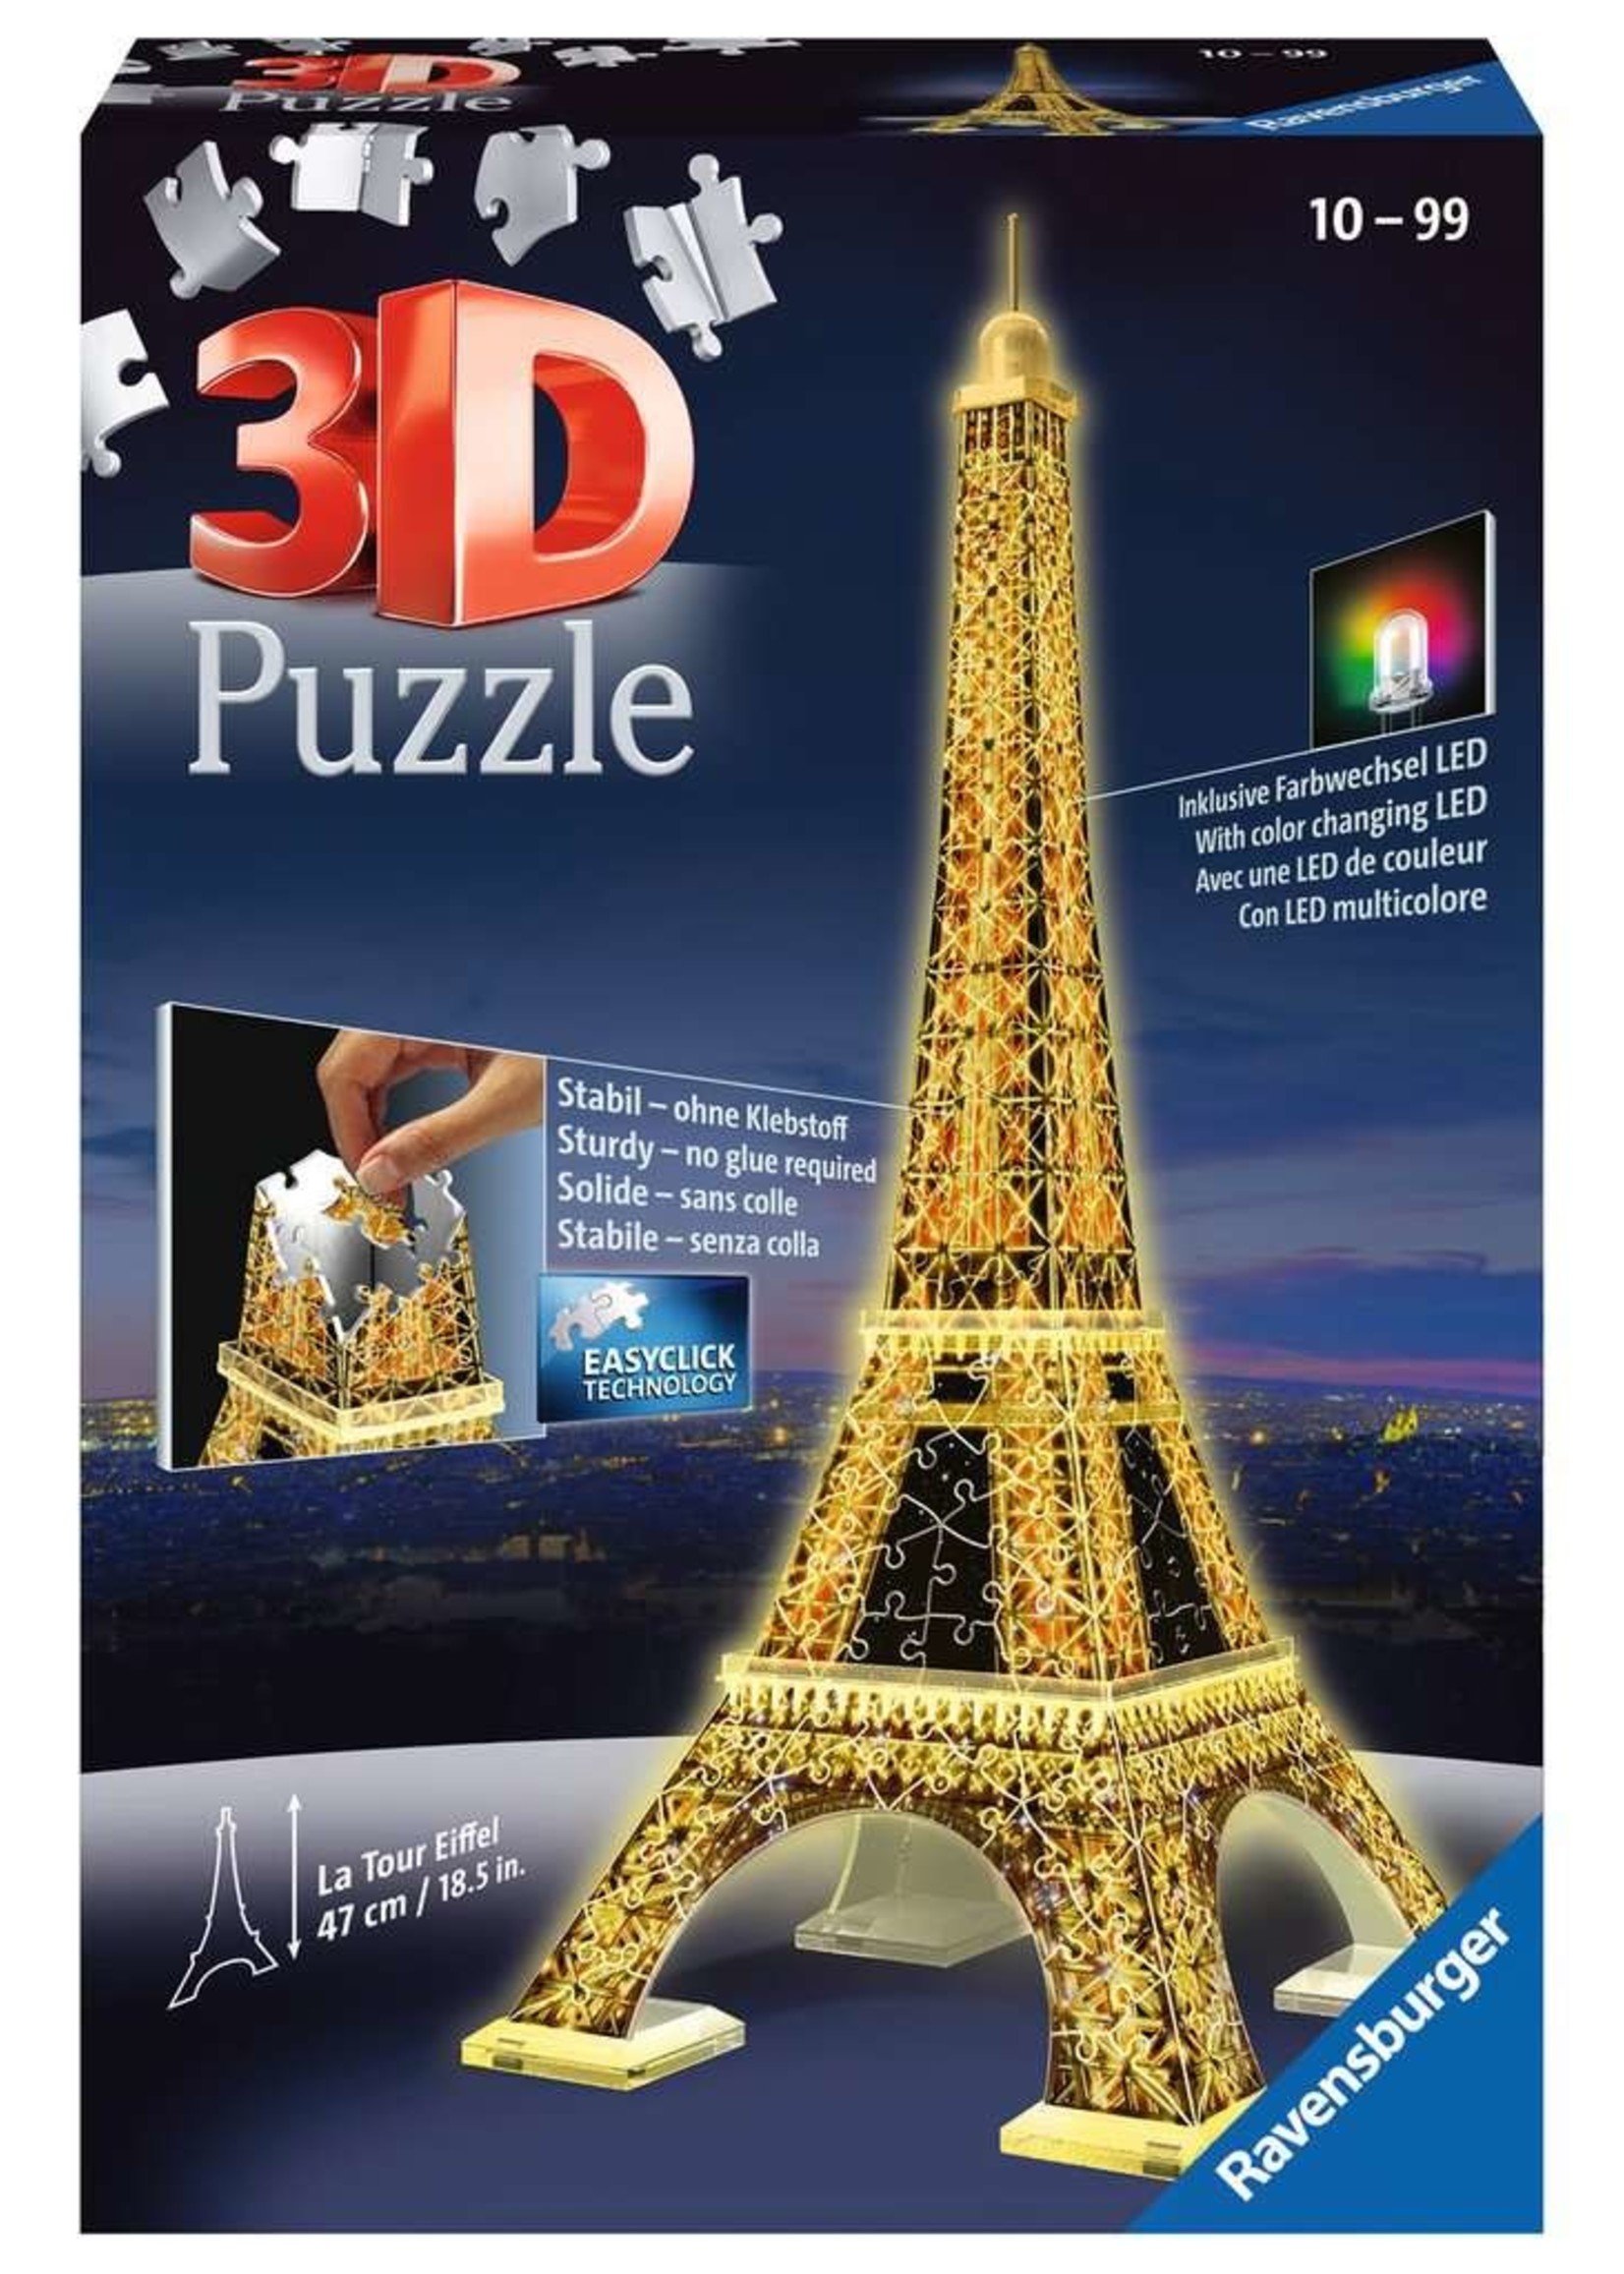 Ravensburger Eiffel Tower Night Edition 3D